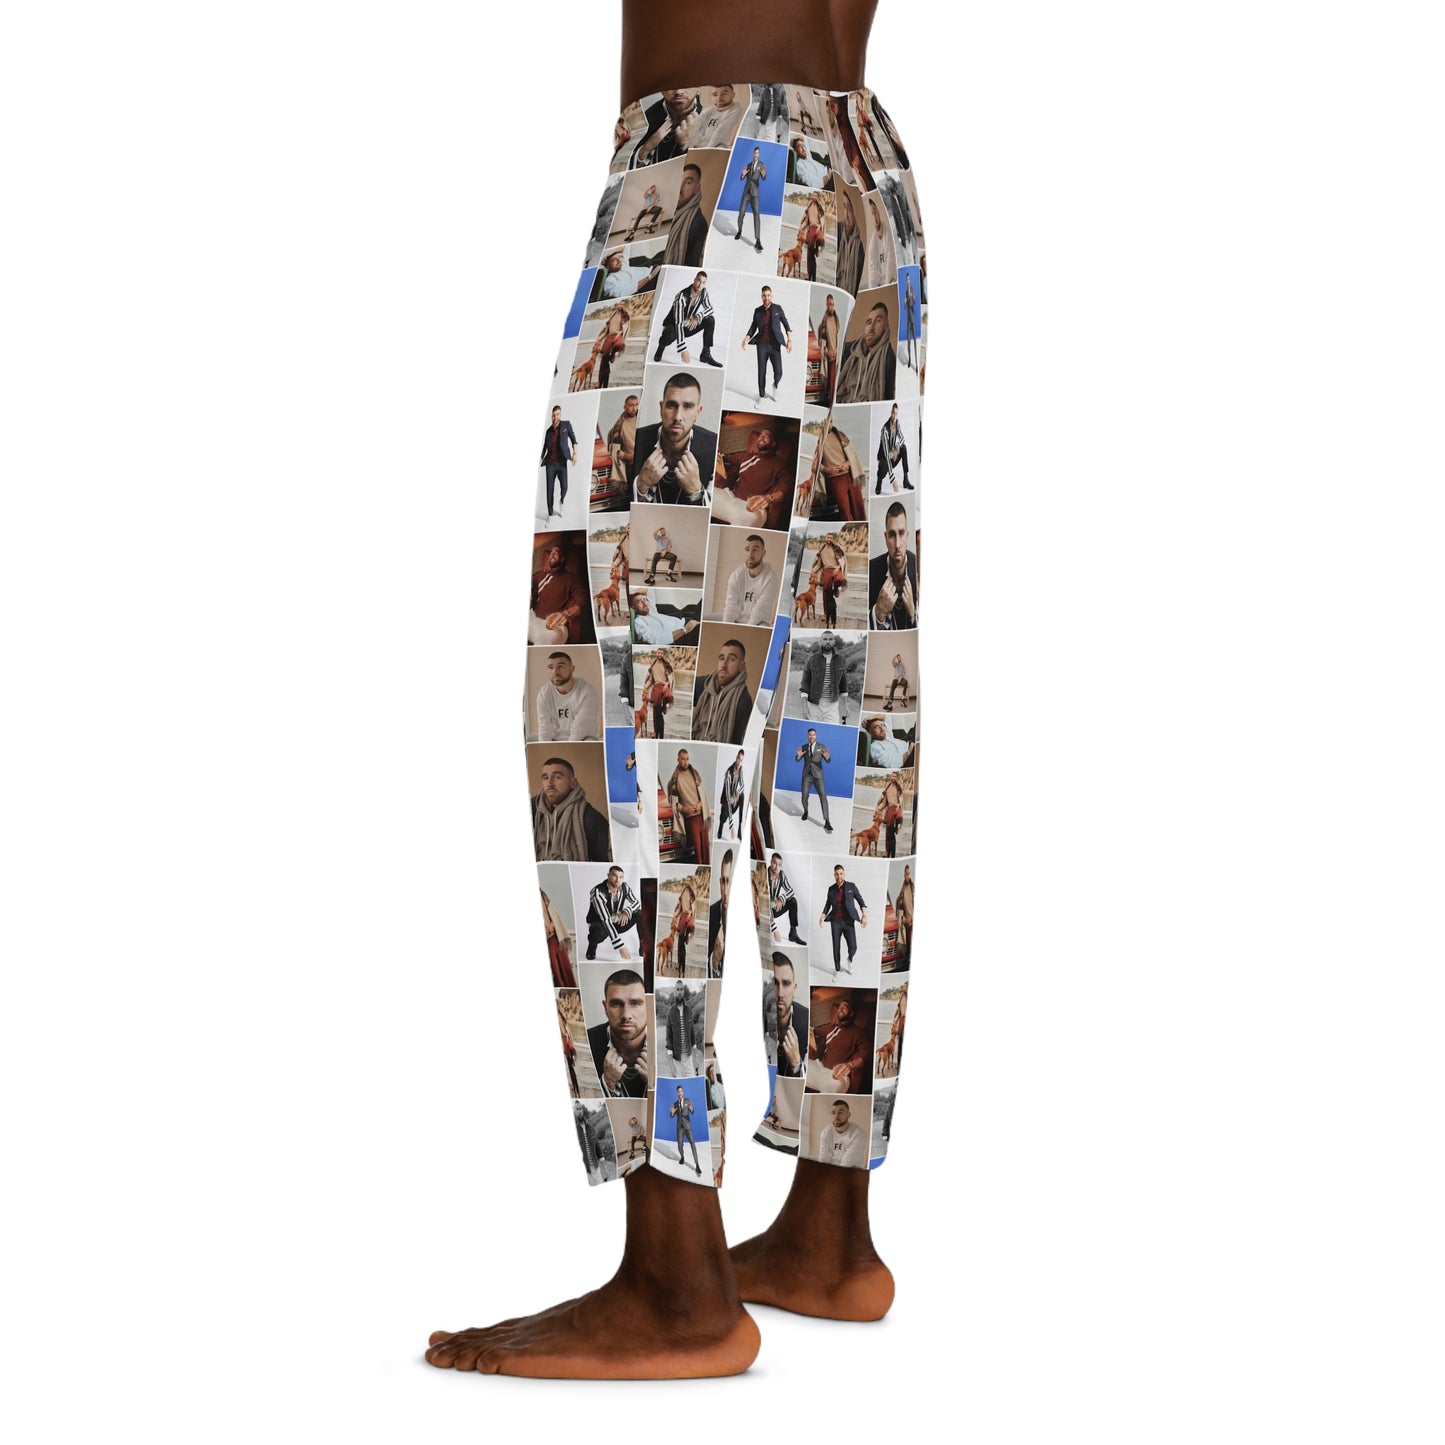 Travis Kelce Portrait Photo Mosaic Men's Pajama Pants